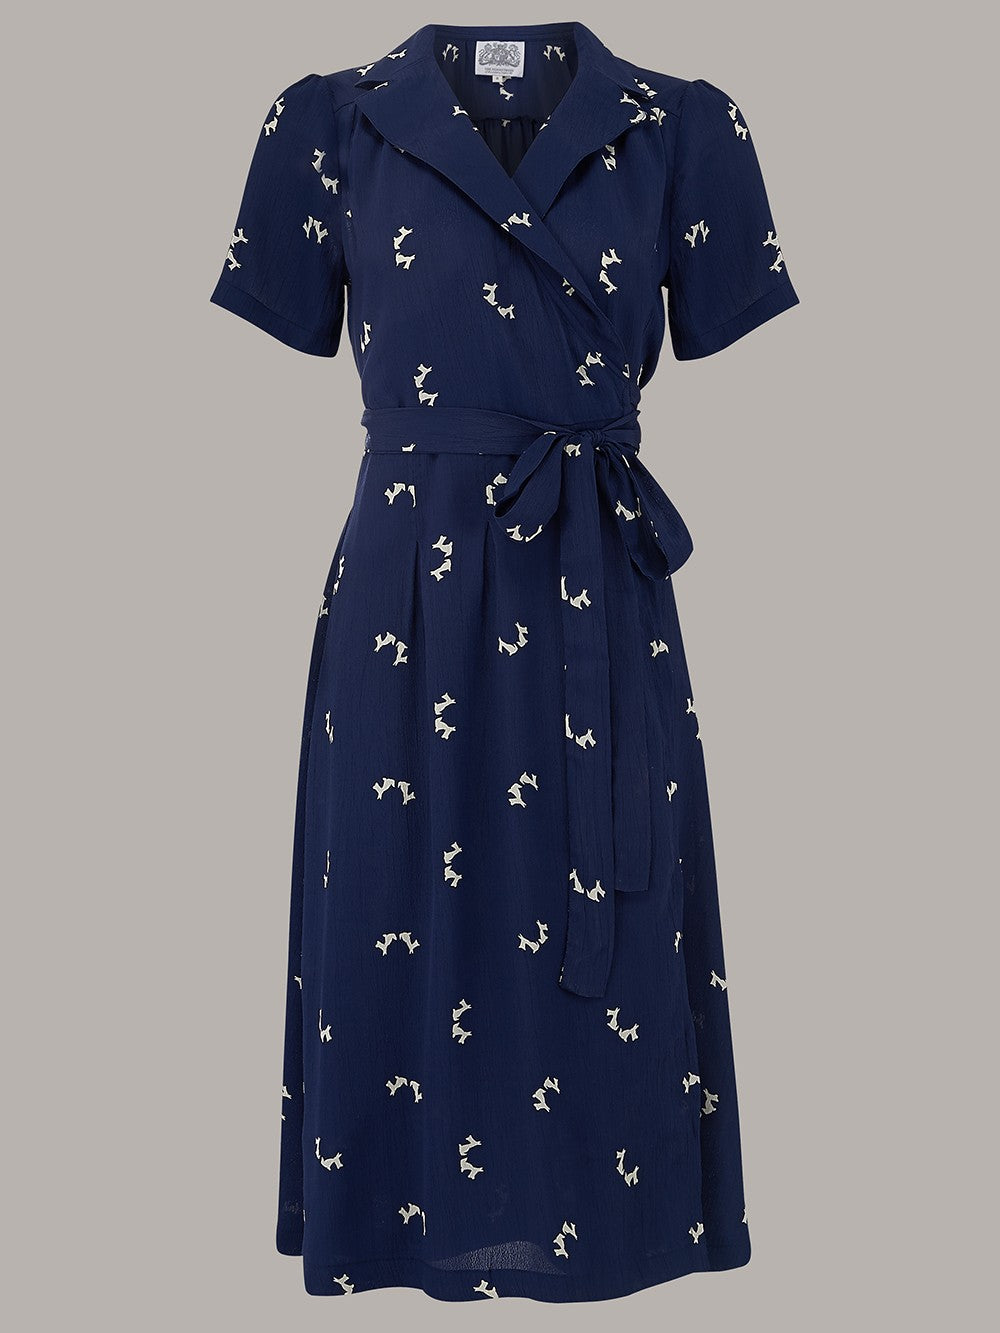 Rita 1940s Dress in Blue Doggy